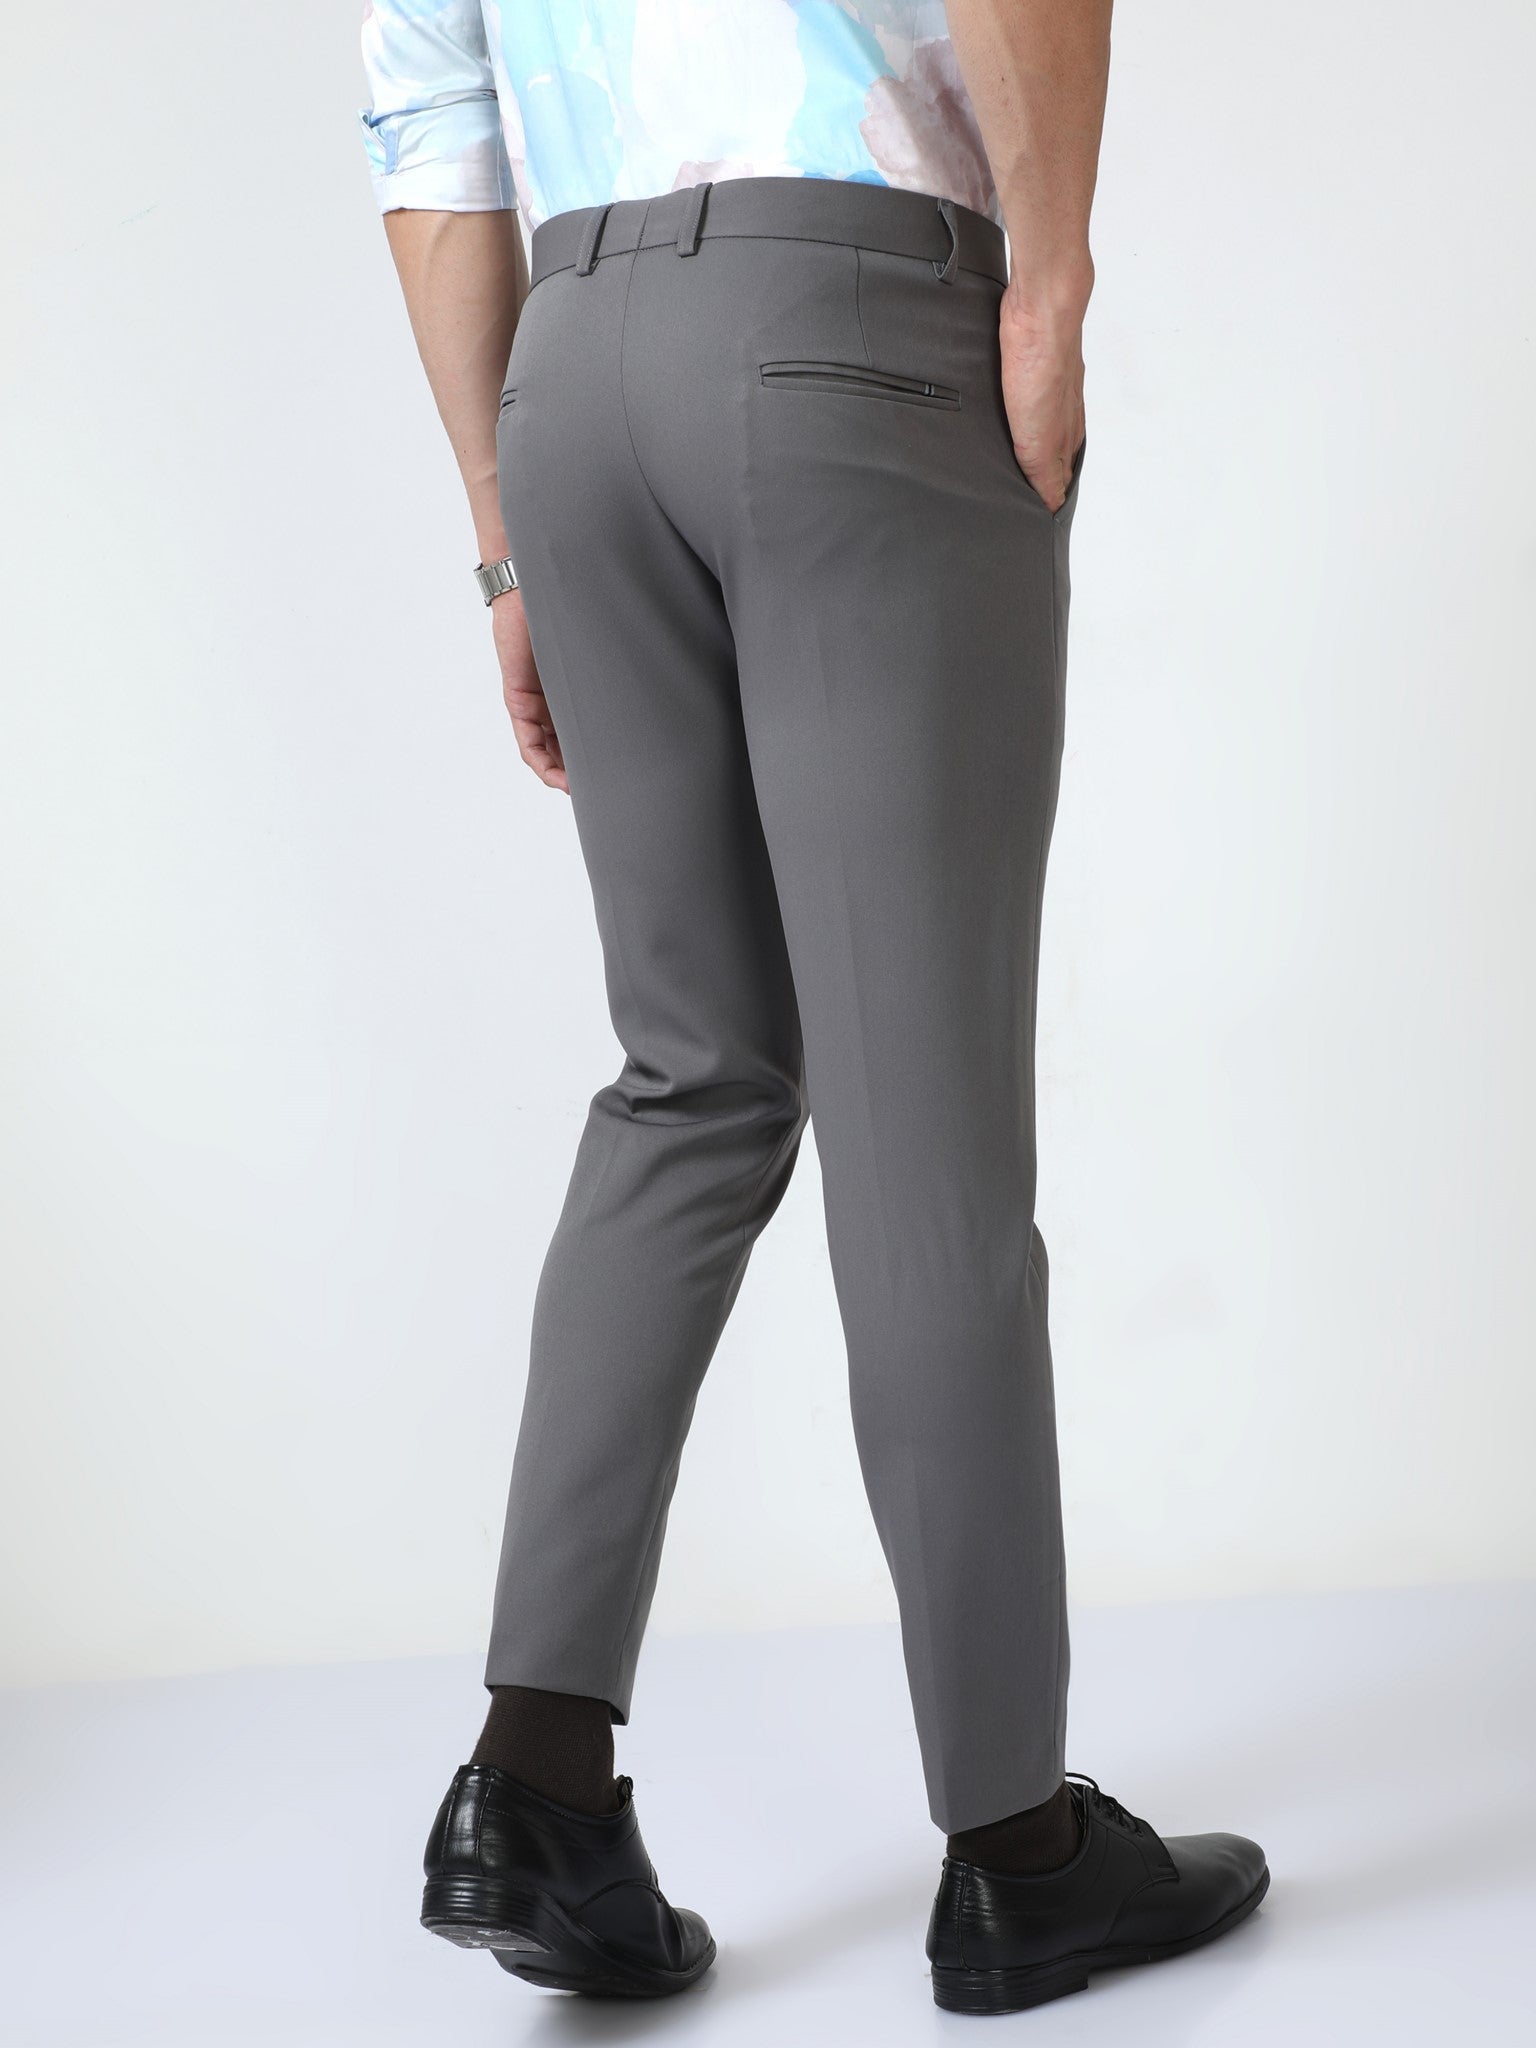 Slack Cool Grey Trouser